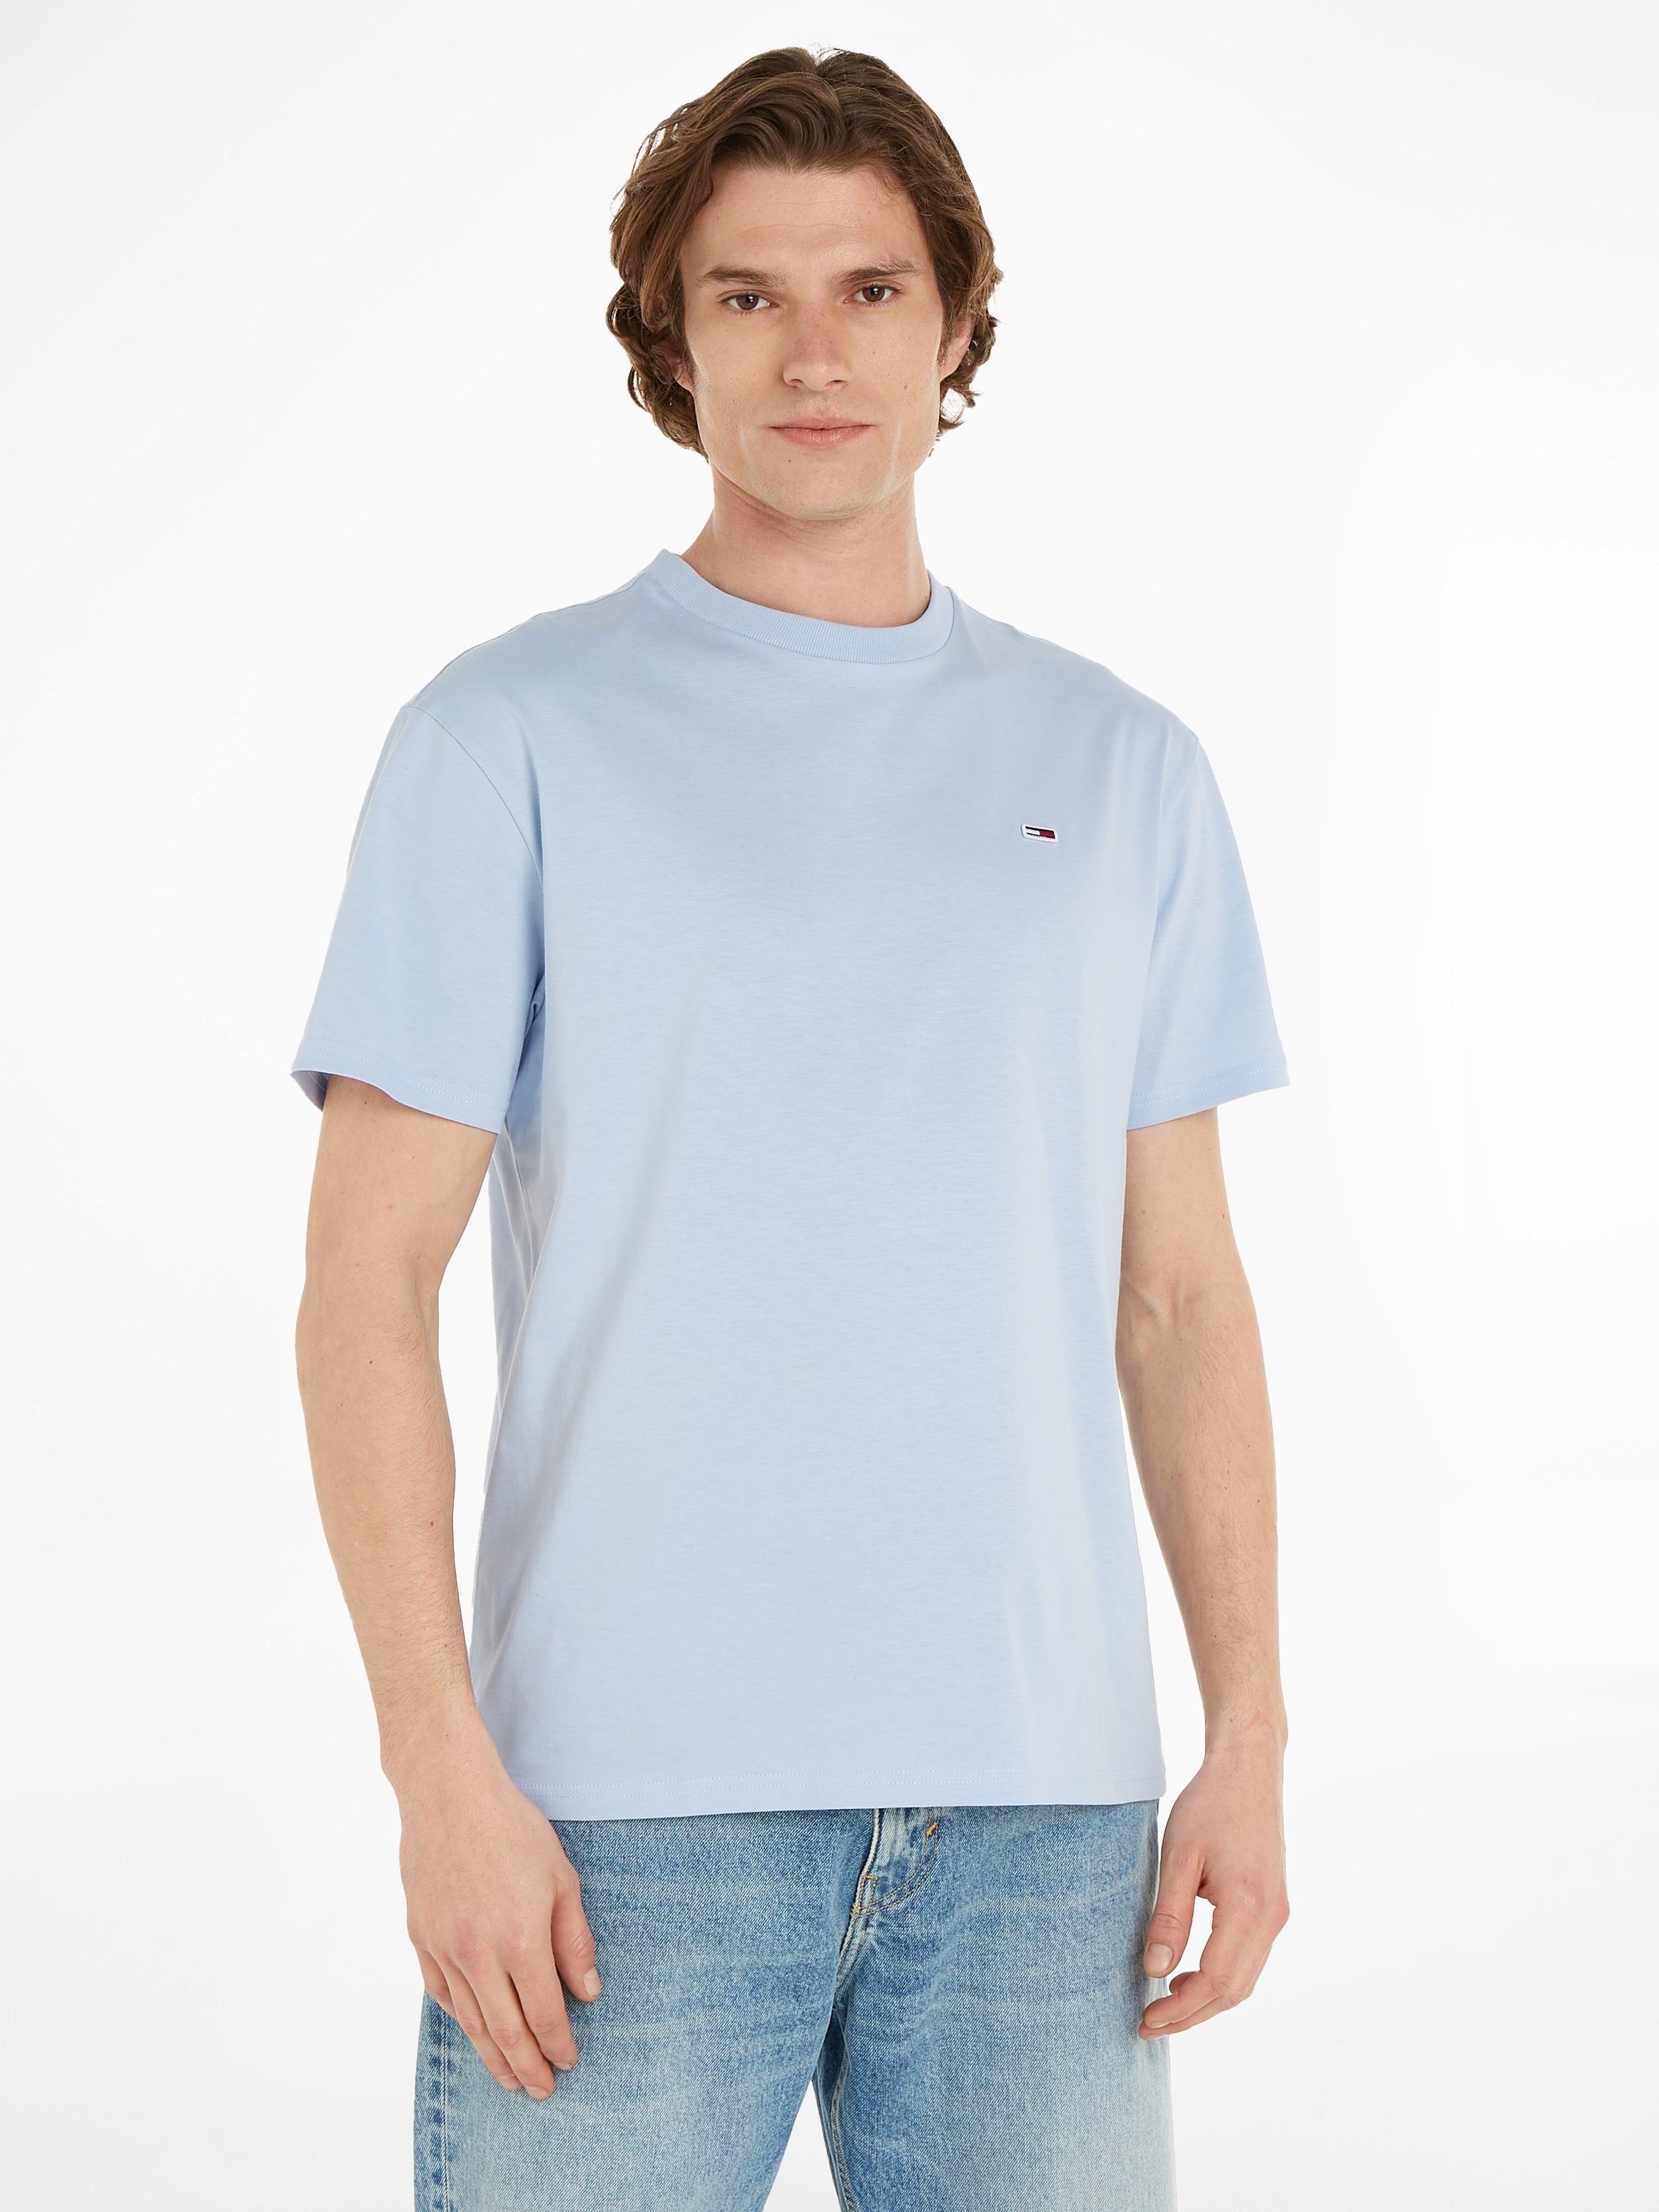 Tommy Jeans T-Shirt TJM CLASSIC JERSEY C Logostickerei blue NECK breezy mit